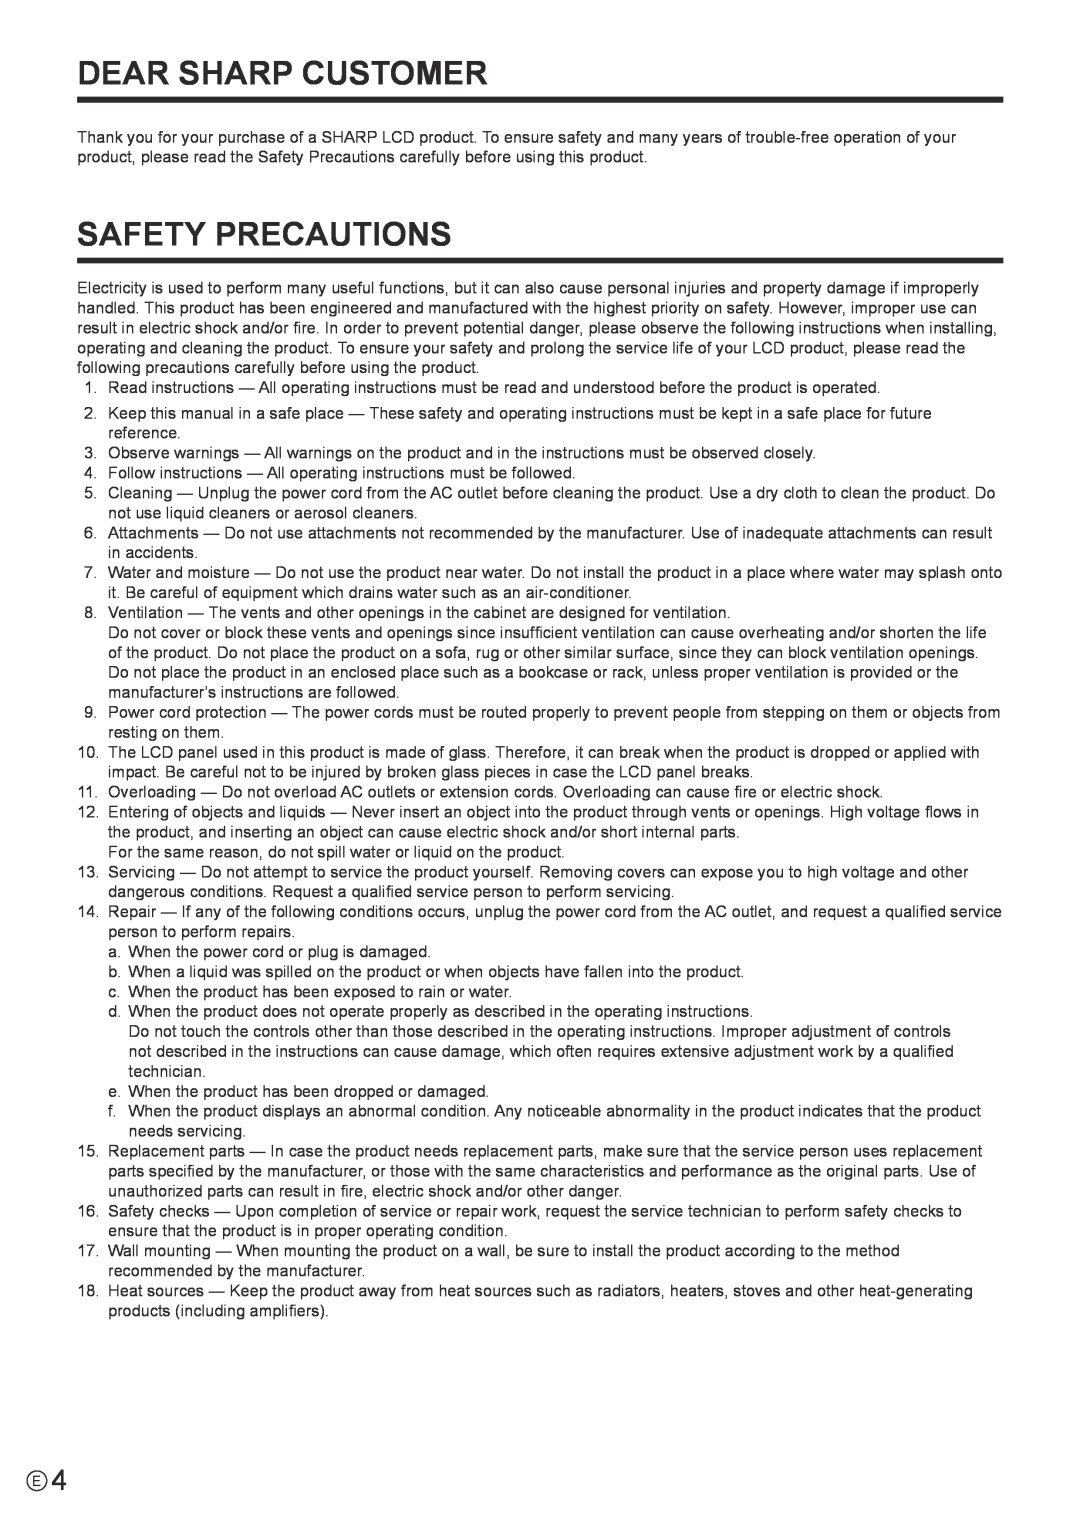 Sharp PN-E802, PNE802 operation manual Dear Sharp Customer, Safety Precautions 